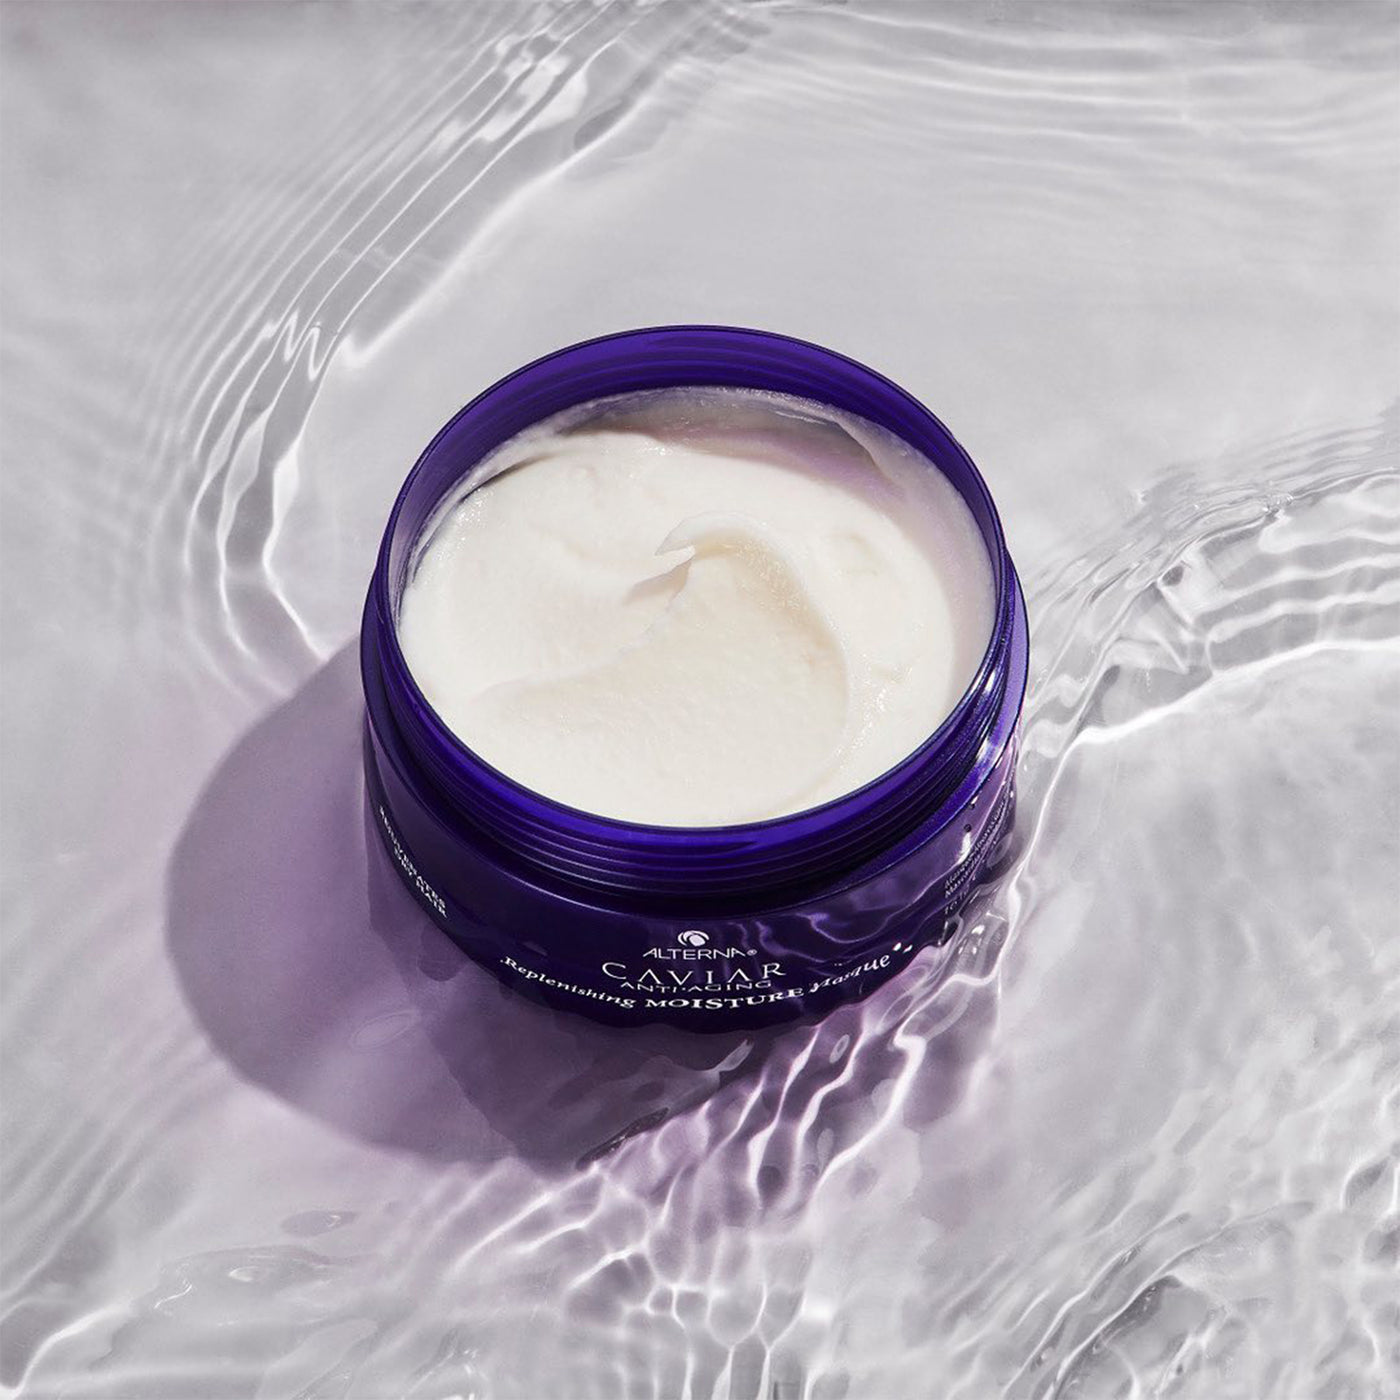 Alterna Caviar Anti-Aging Replenishing Moisture Hair Masque 161g